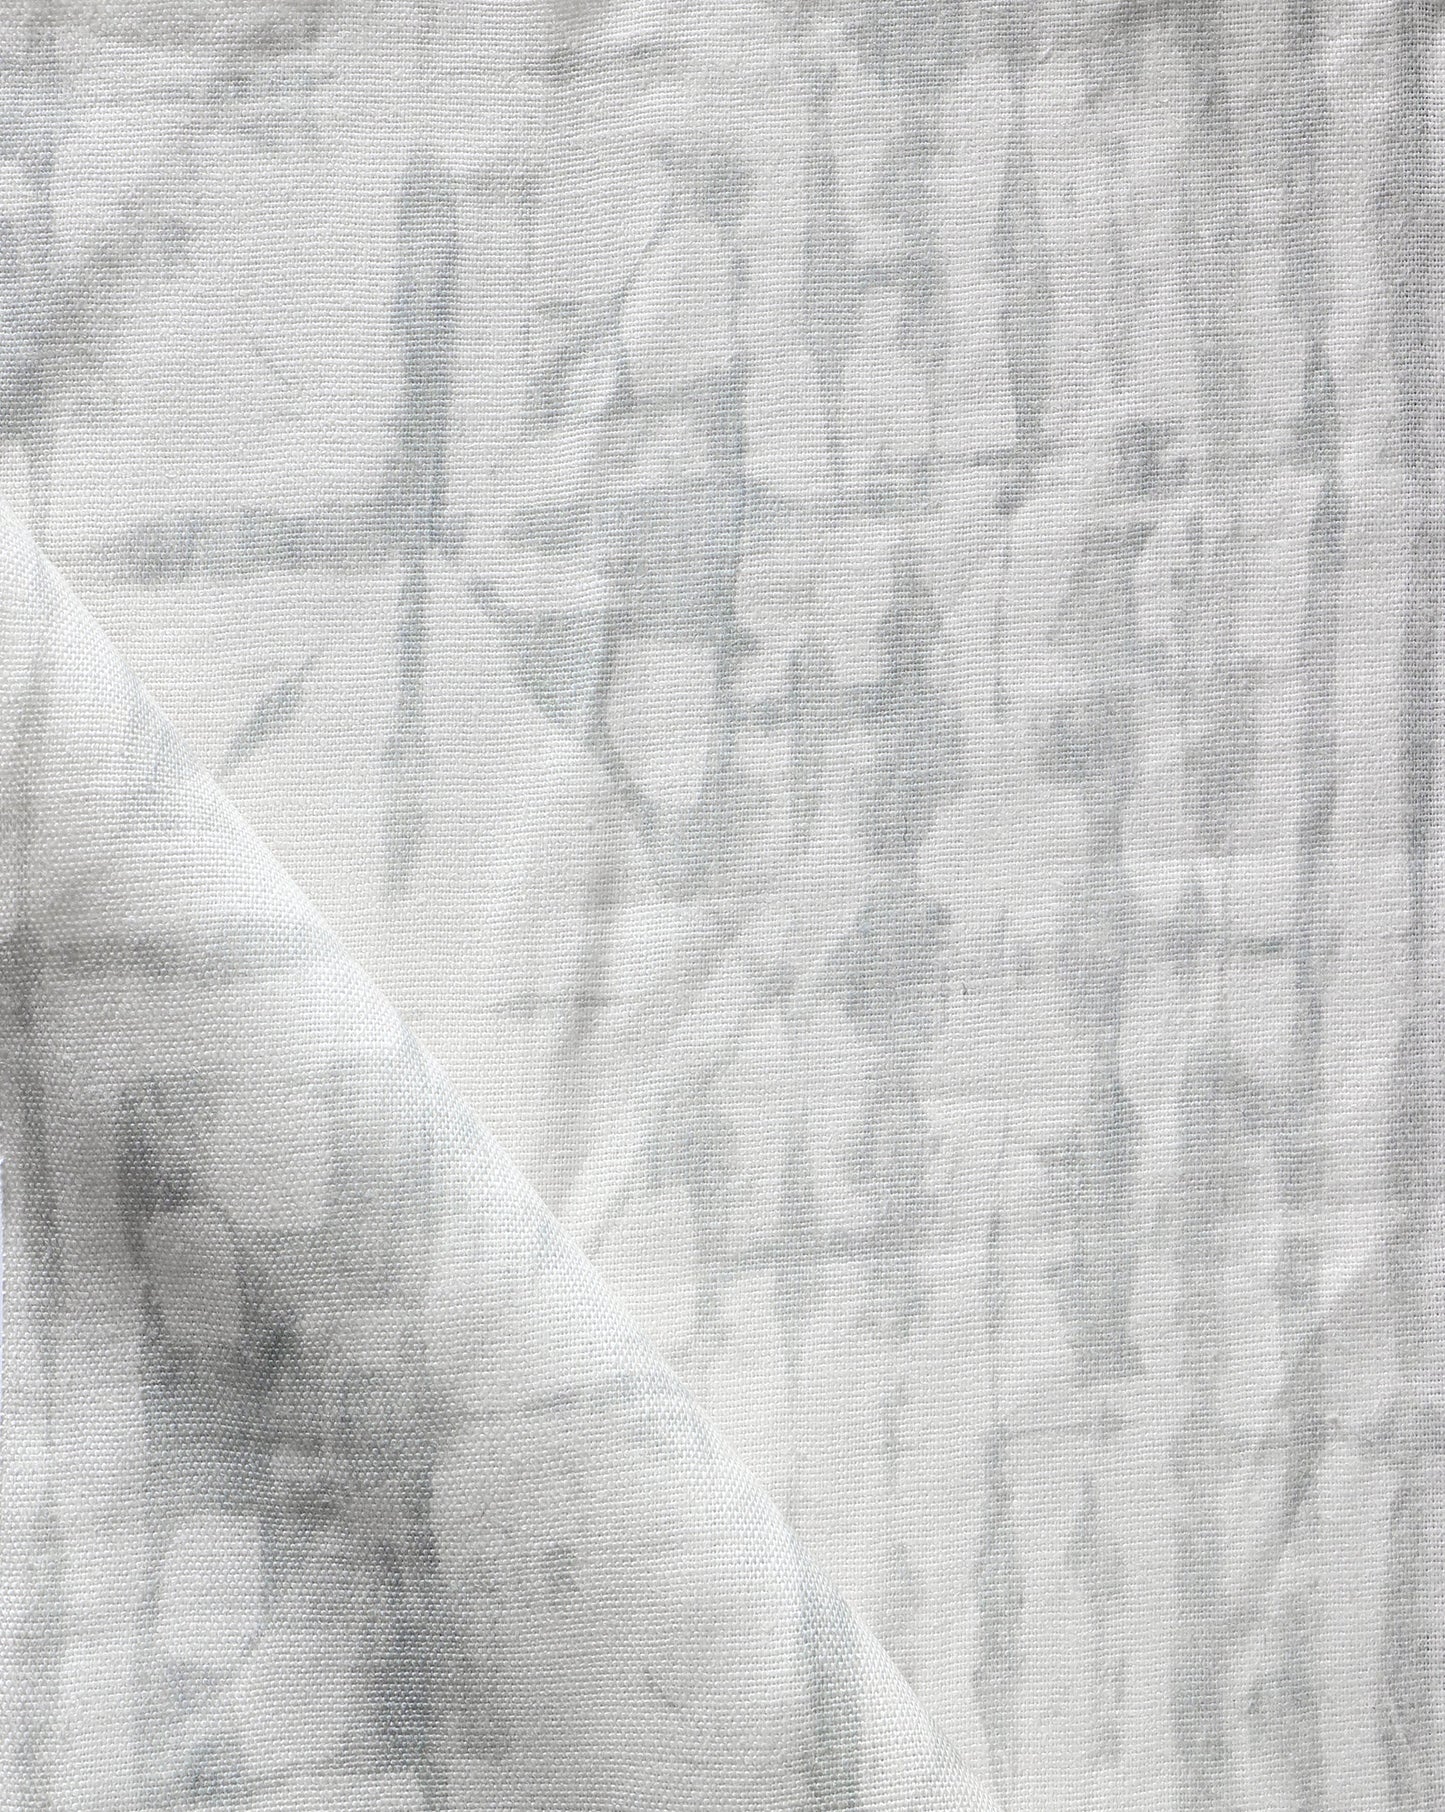 A close up of a white and gray Banda Fabric Bare by Eskayel, featuring shibori tie-dye patterns